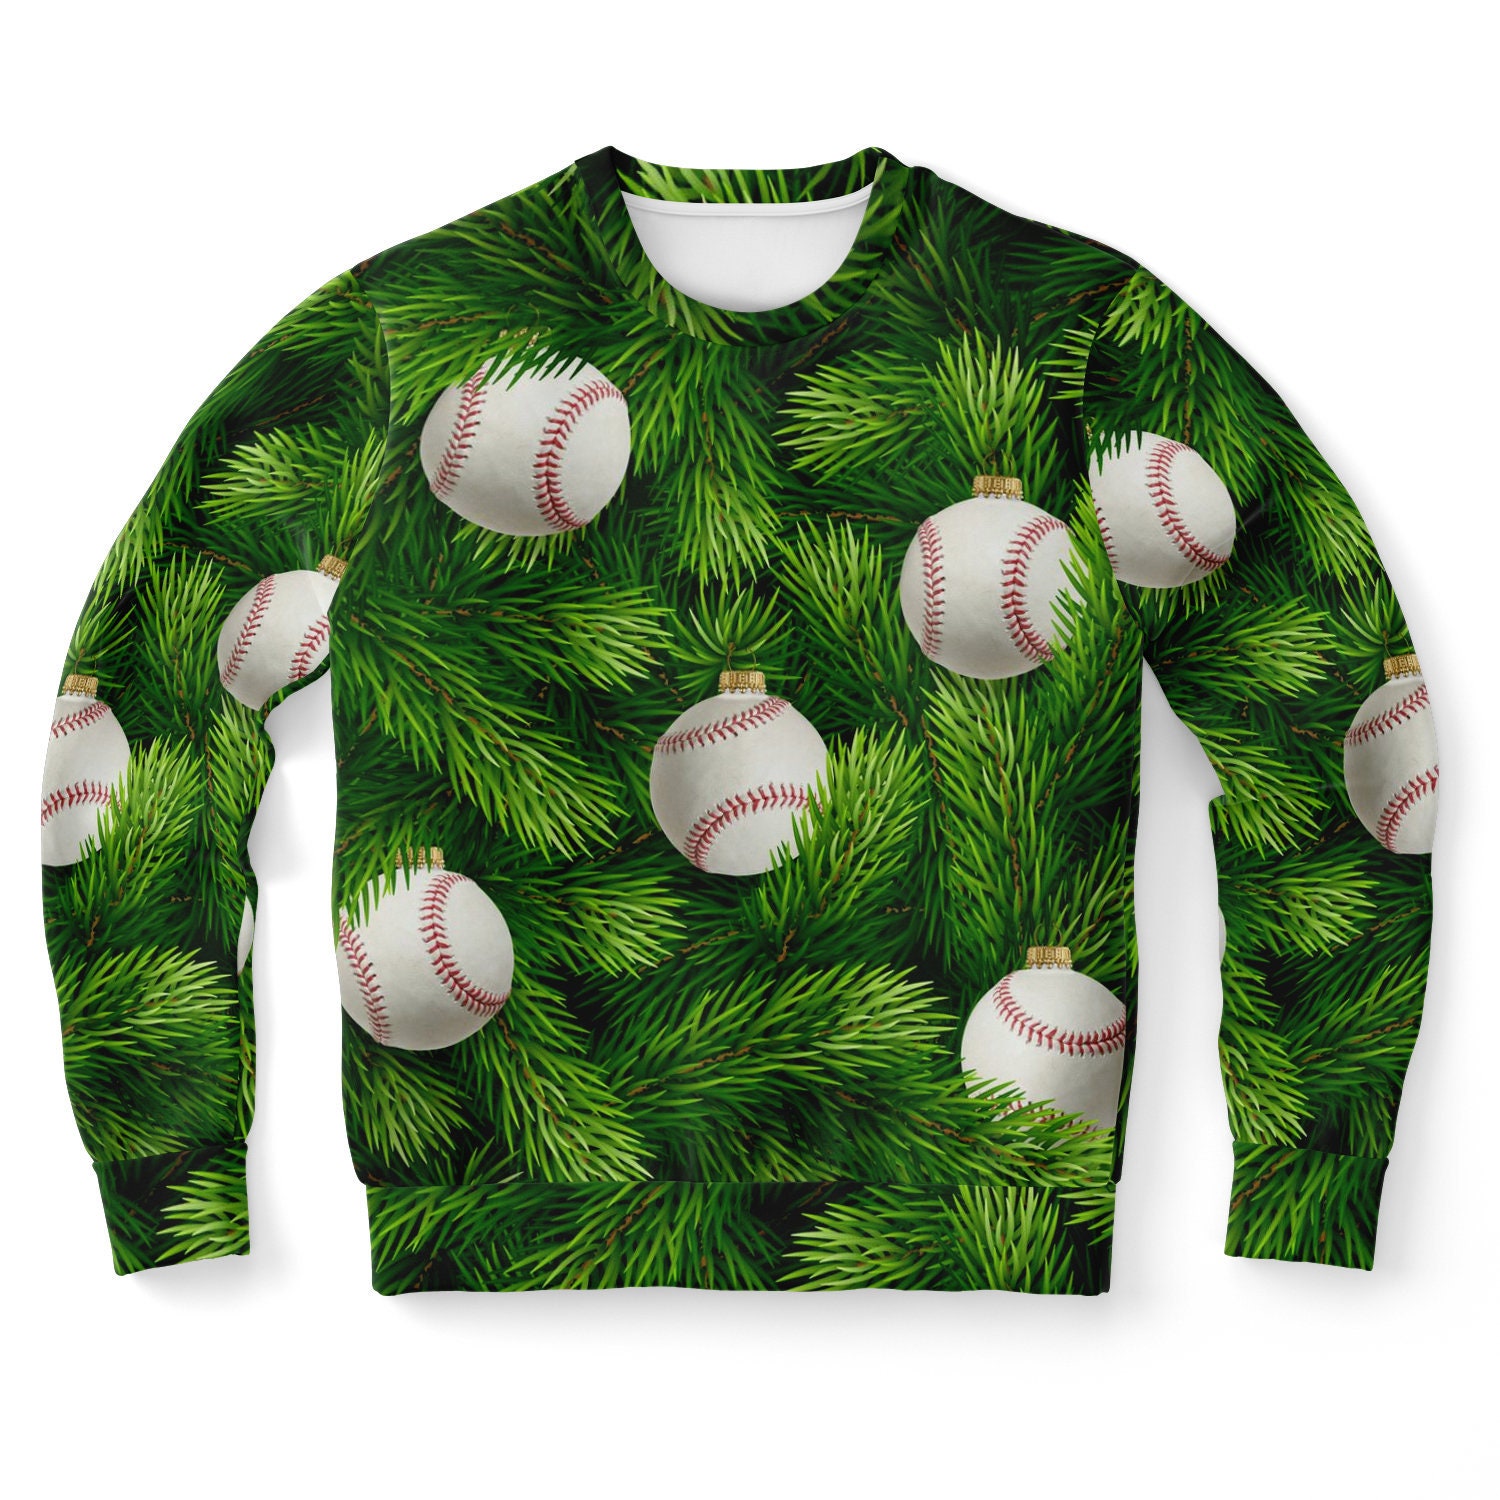 Baseball Tree Christmas sweater funny Christmas sweater Ugly | Etsy